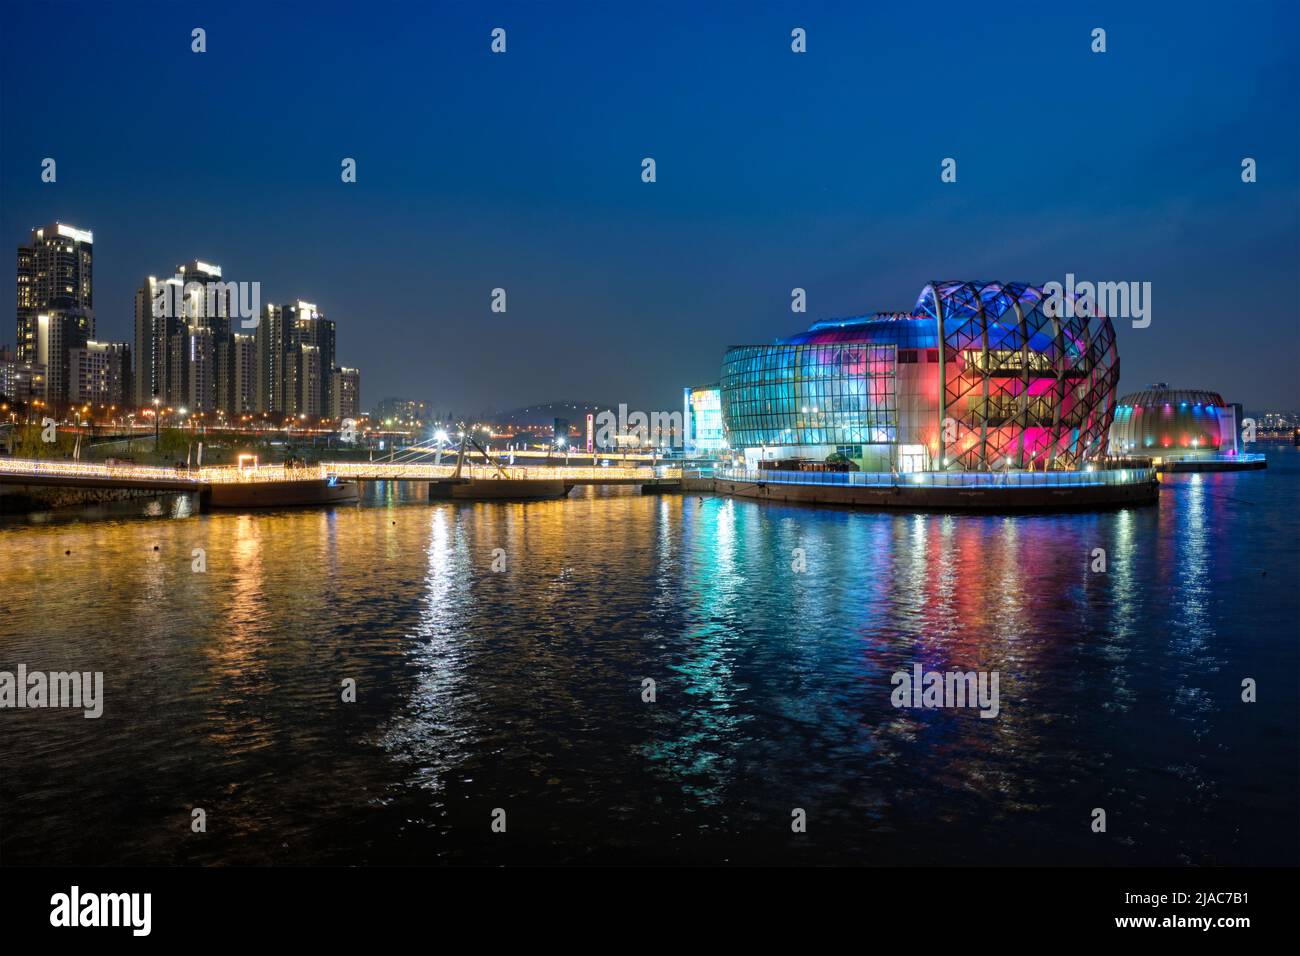 Some Sevit buildings on artificial floating islands located near the Banpo Bridge illuminated at night, Seoul, South Korea Stock Photo